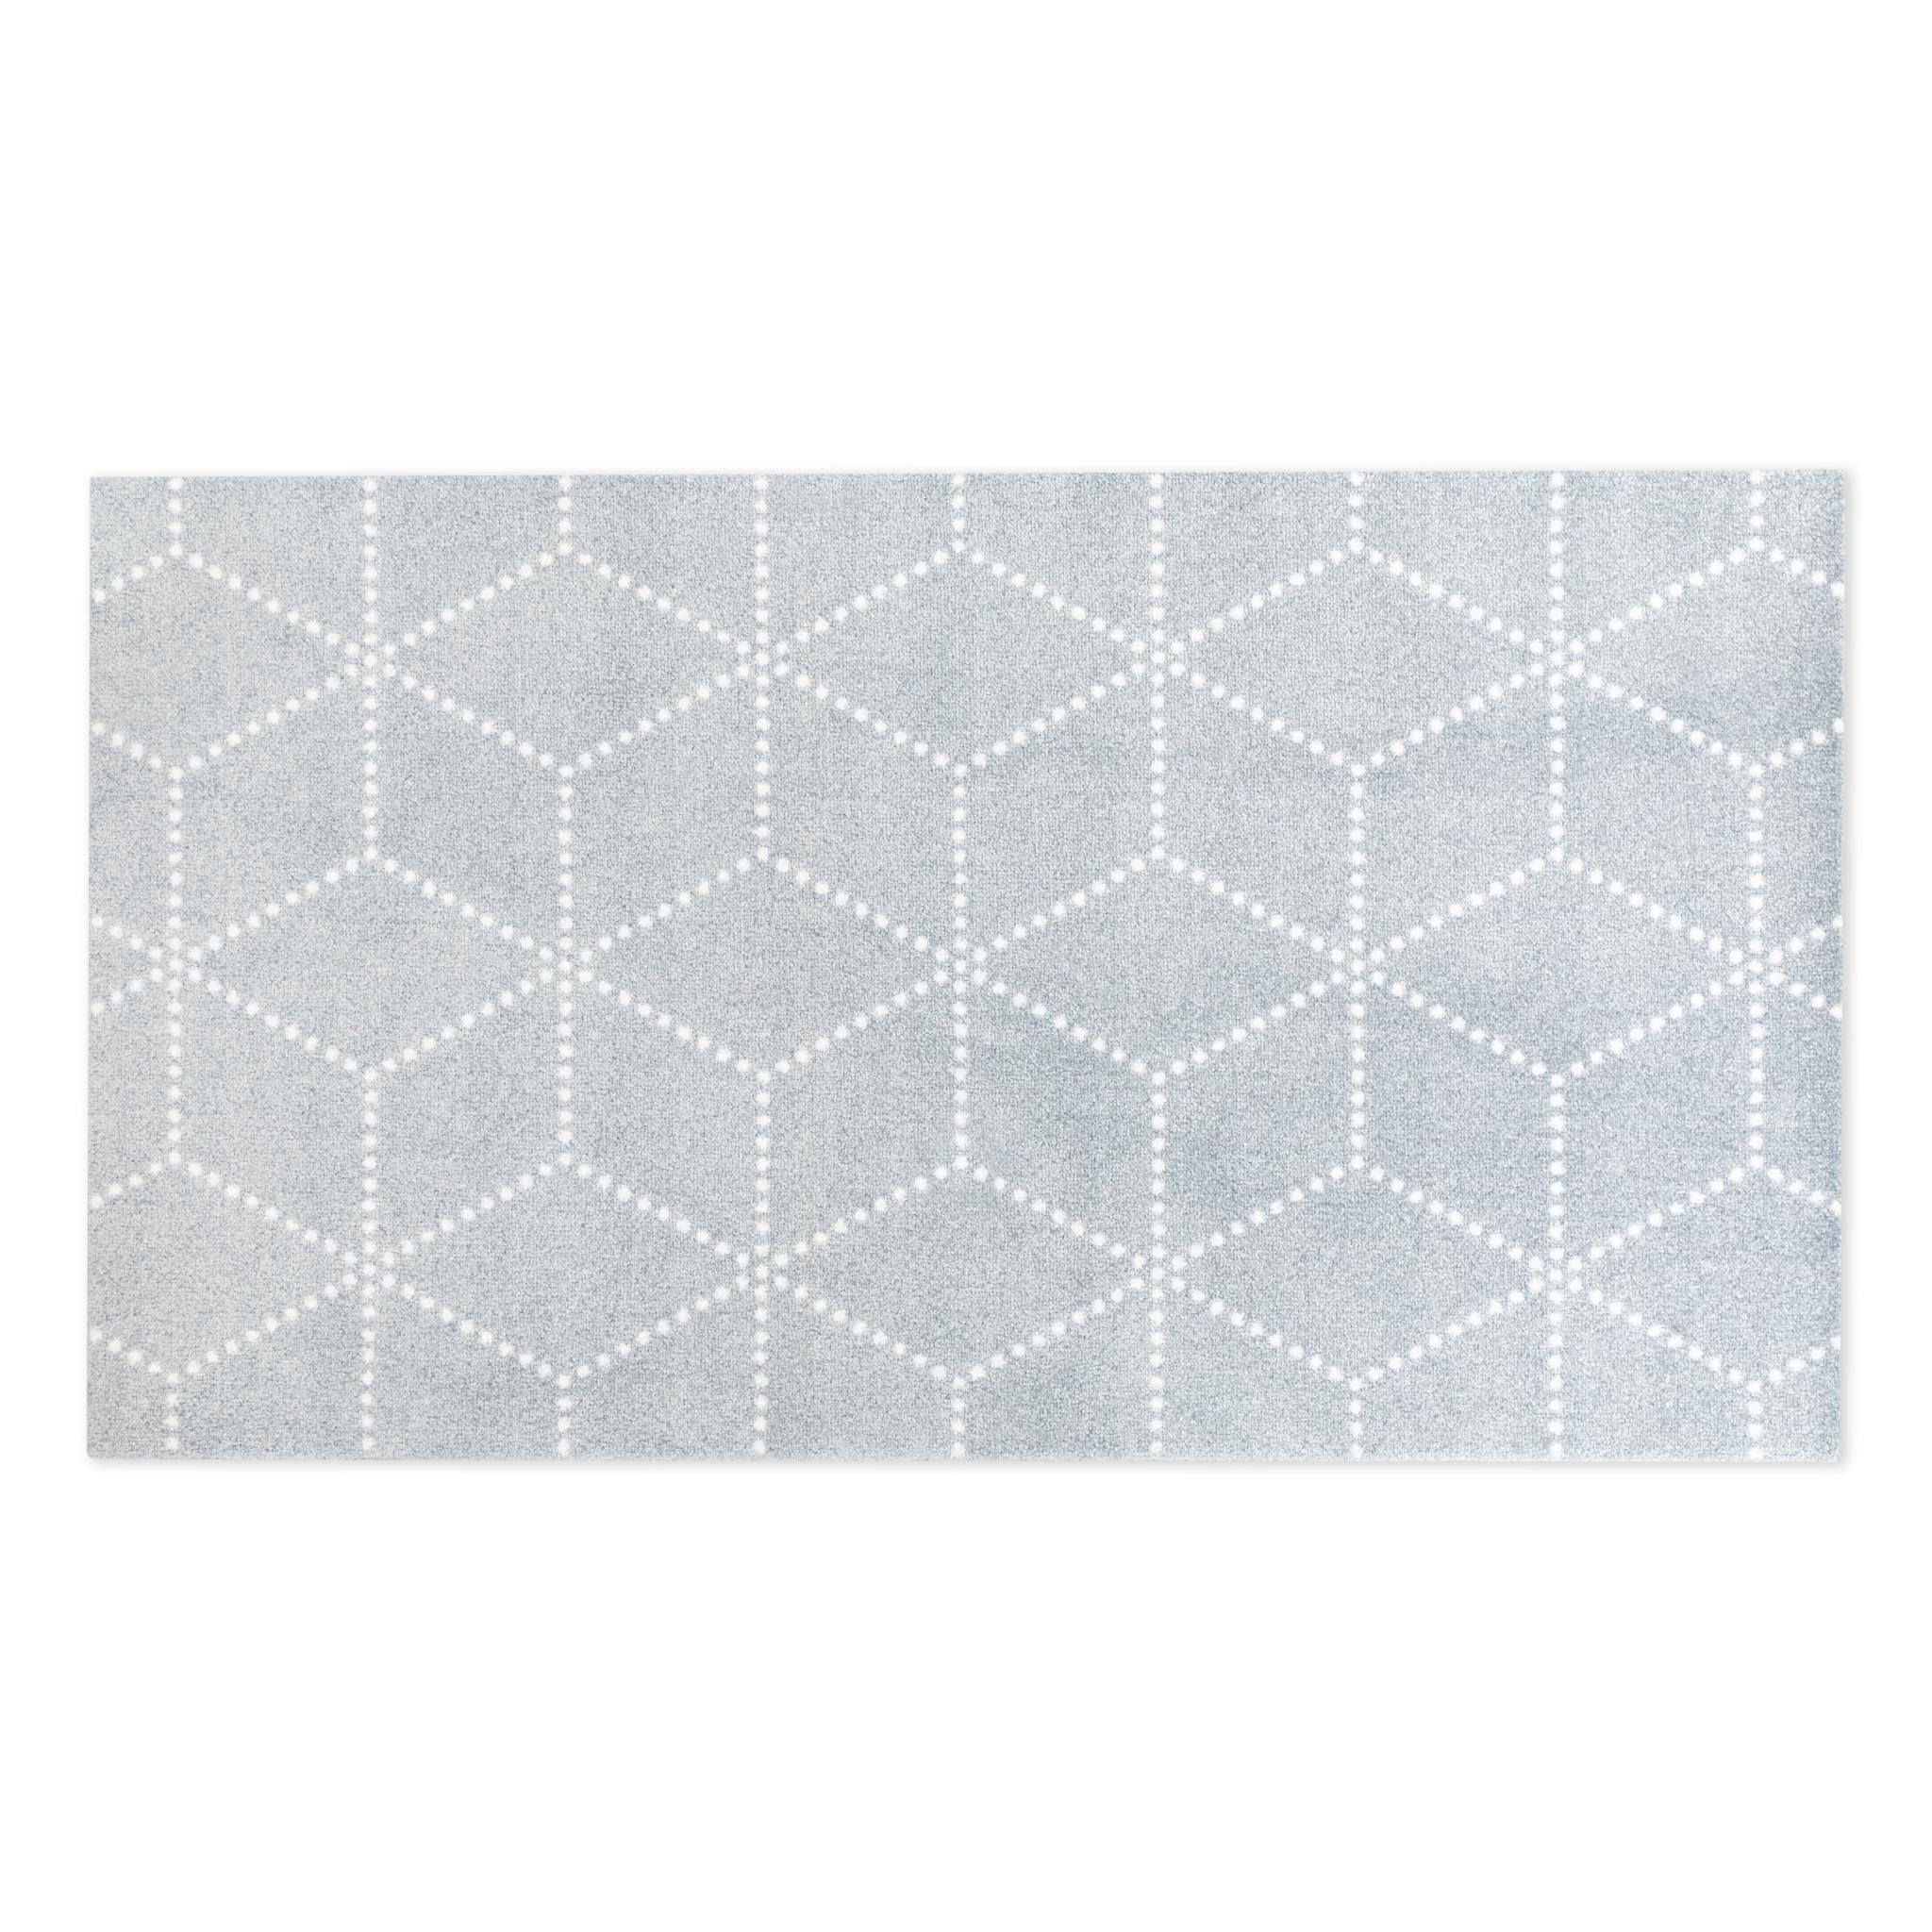 Heymat Doormat Hagl Silver, 85x150 cm